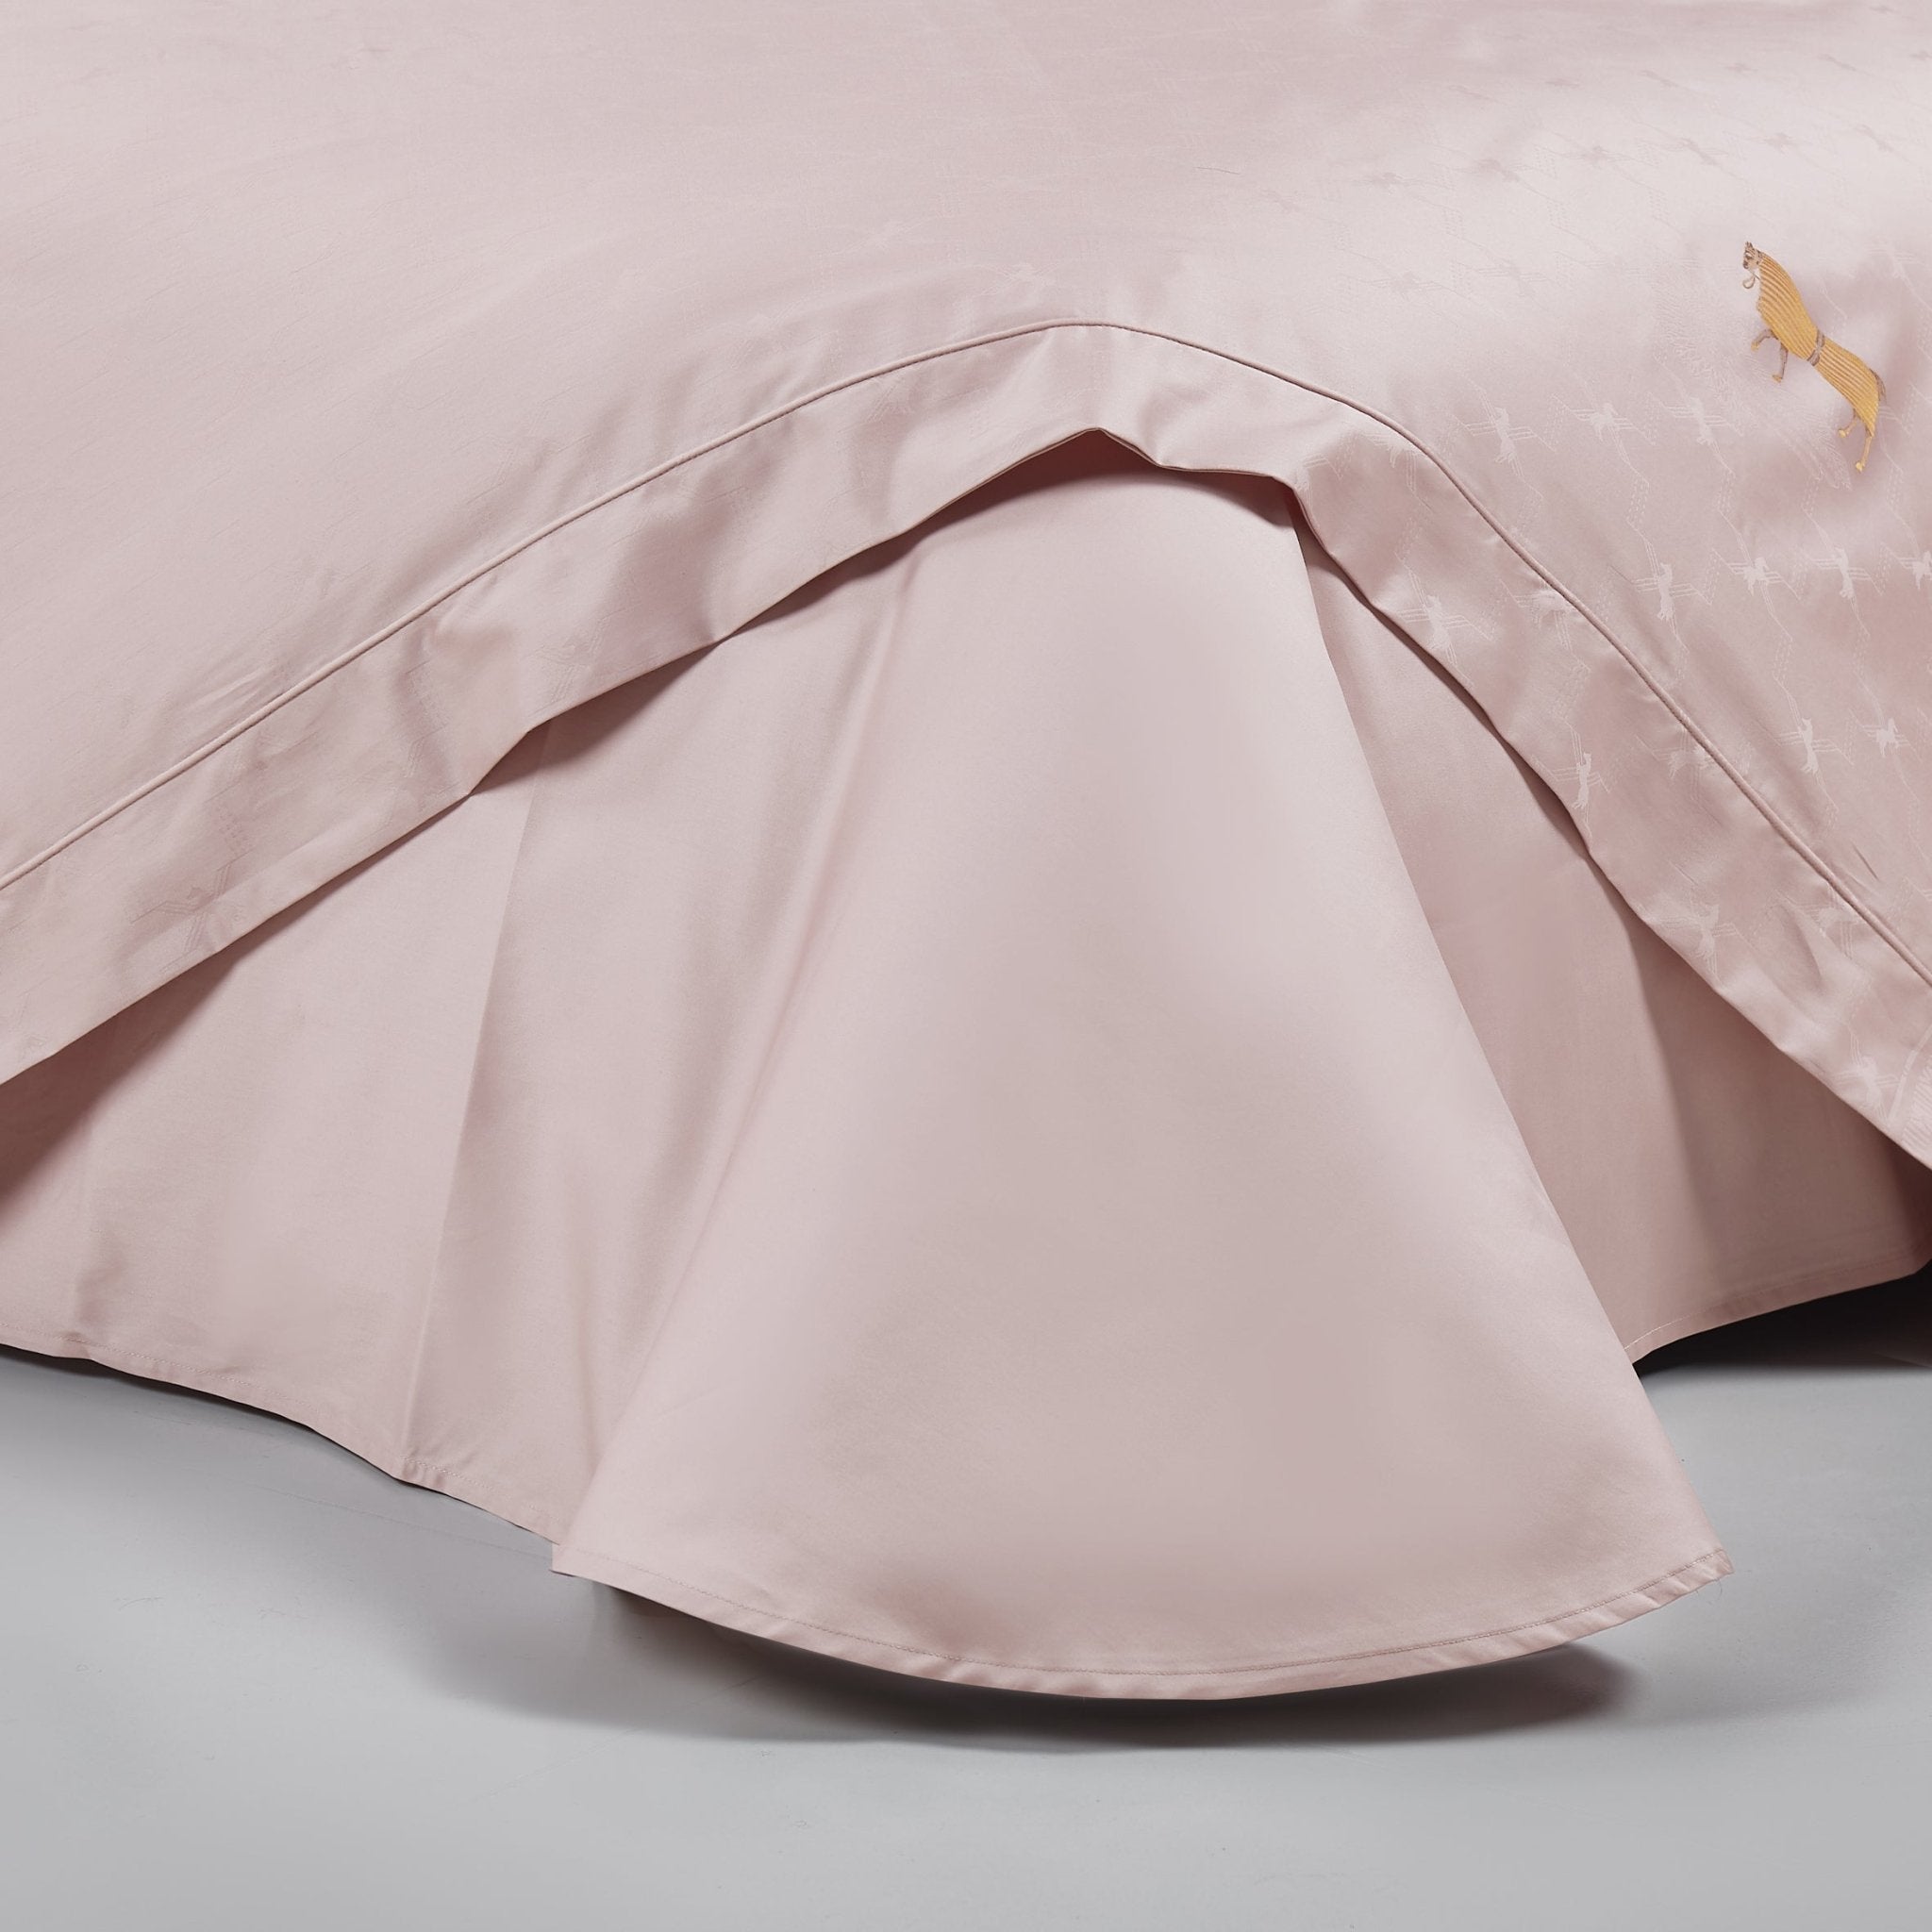 Malako Italian Opulence 800 TC Peach Pink Jacquard Super King Size 100% Egyptian Cotton Bed Sheet/Duvet Cover - MALAKO